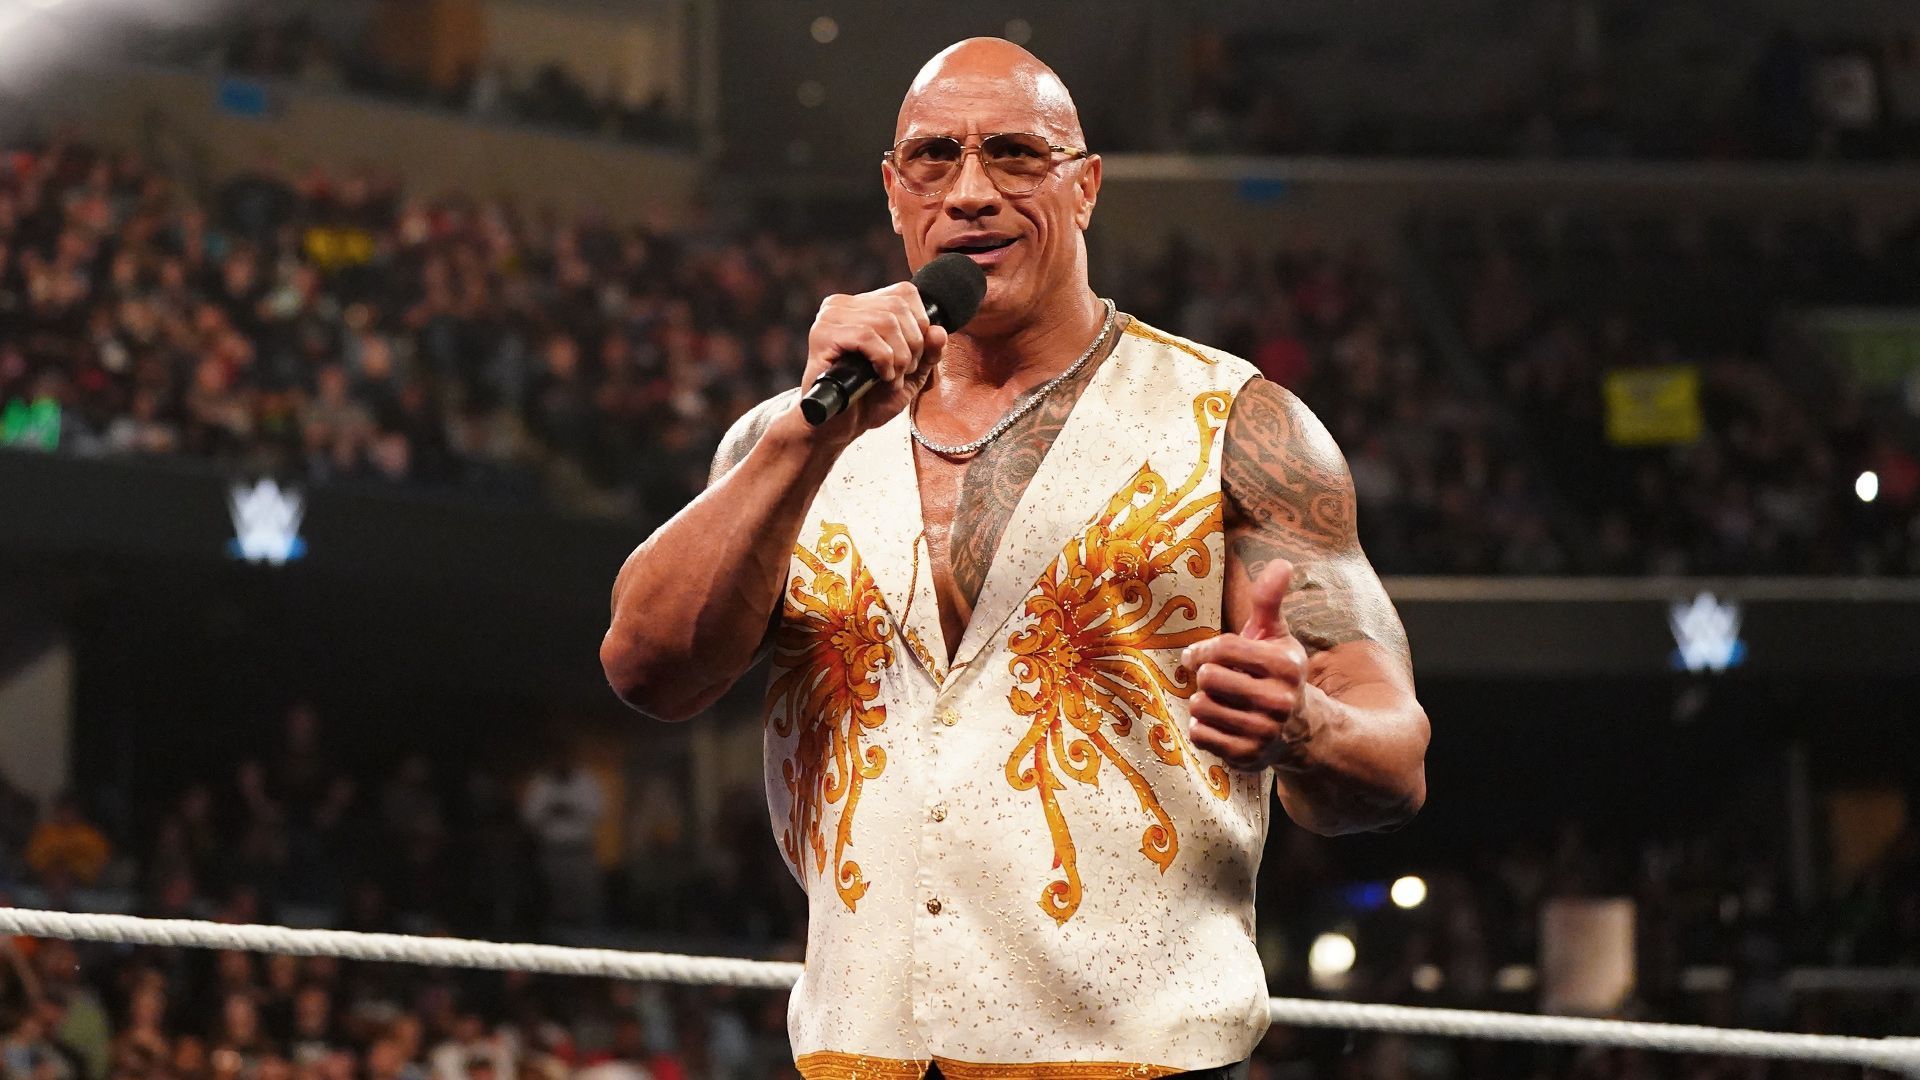 The Rock has made an impactful return to WWE.